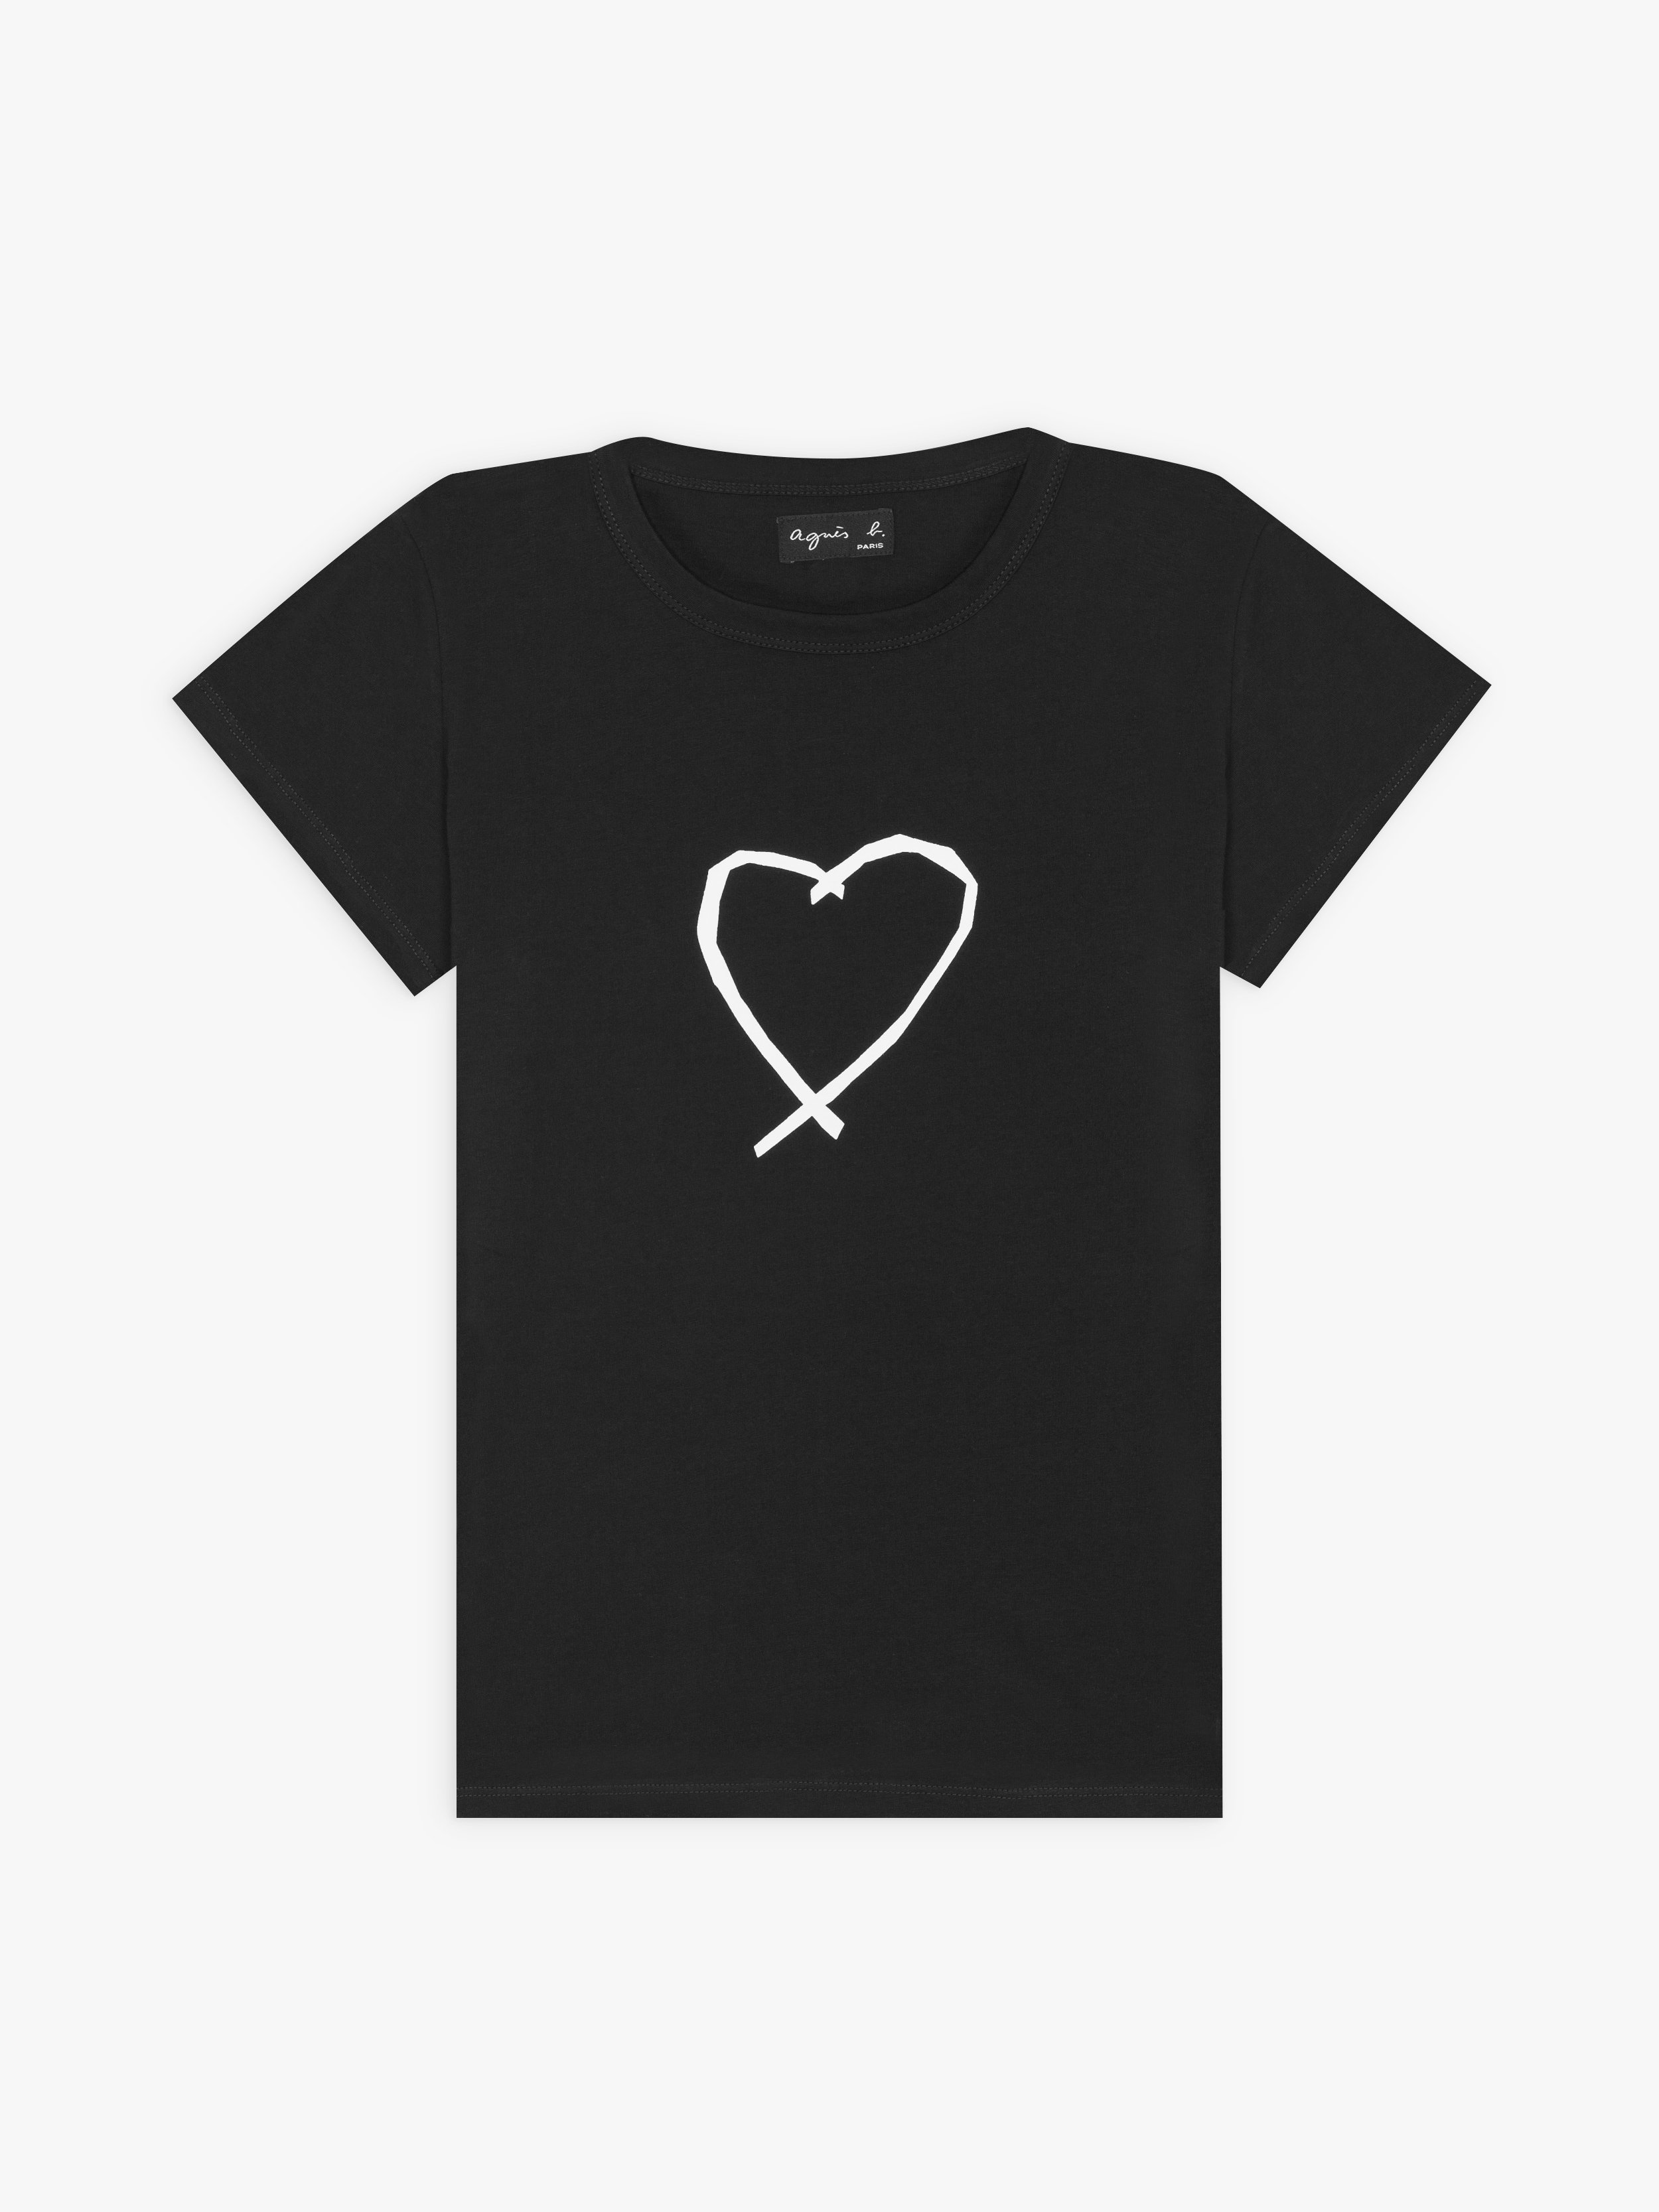 Black Heart T-Shirt - White/Black